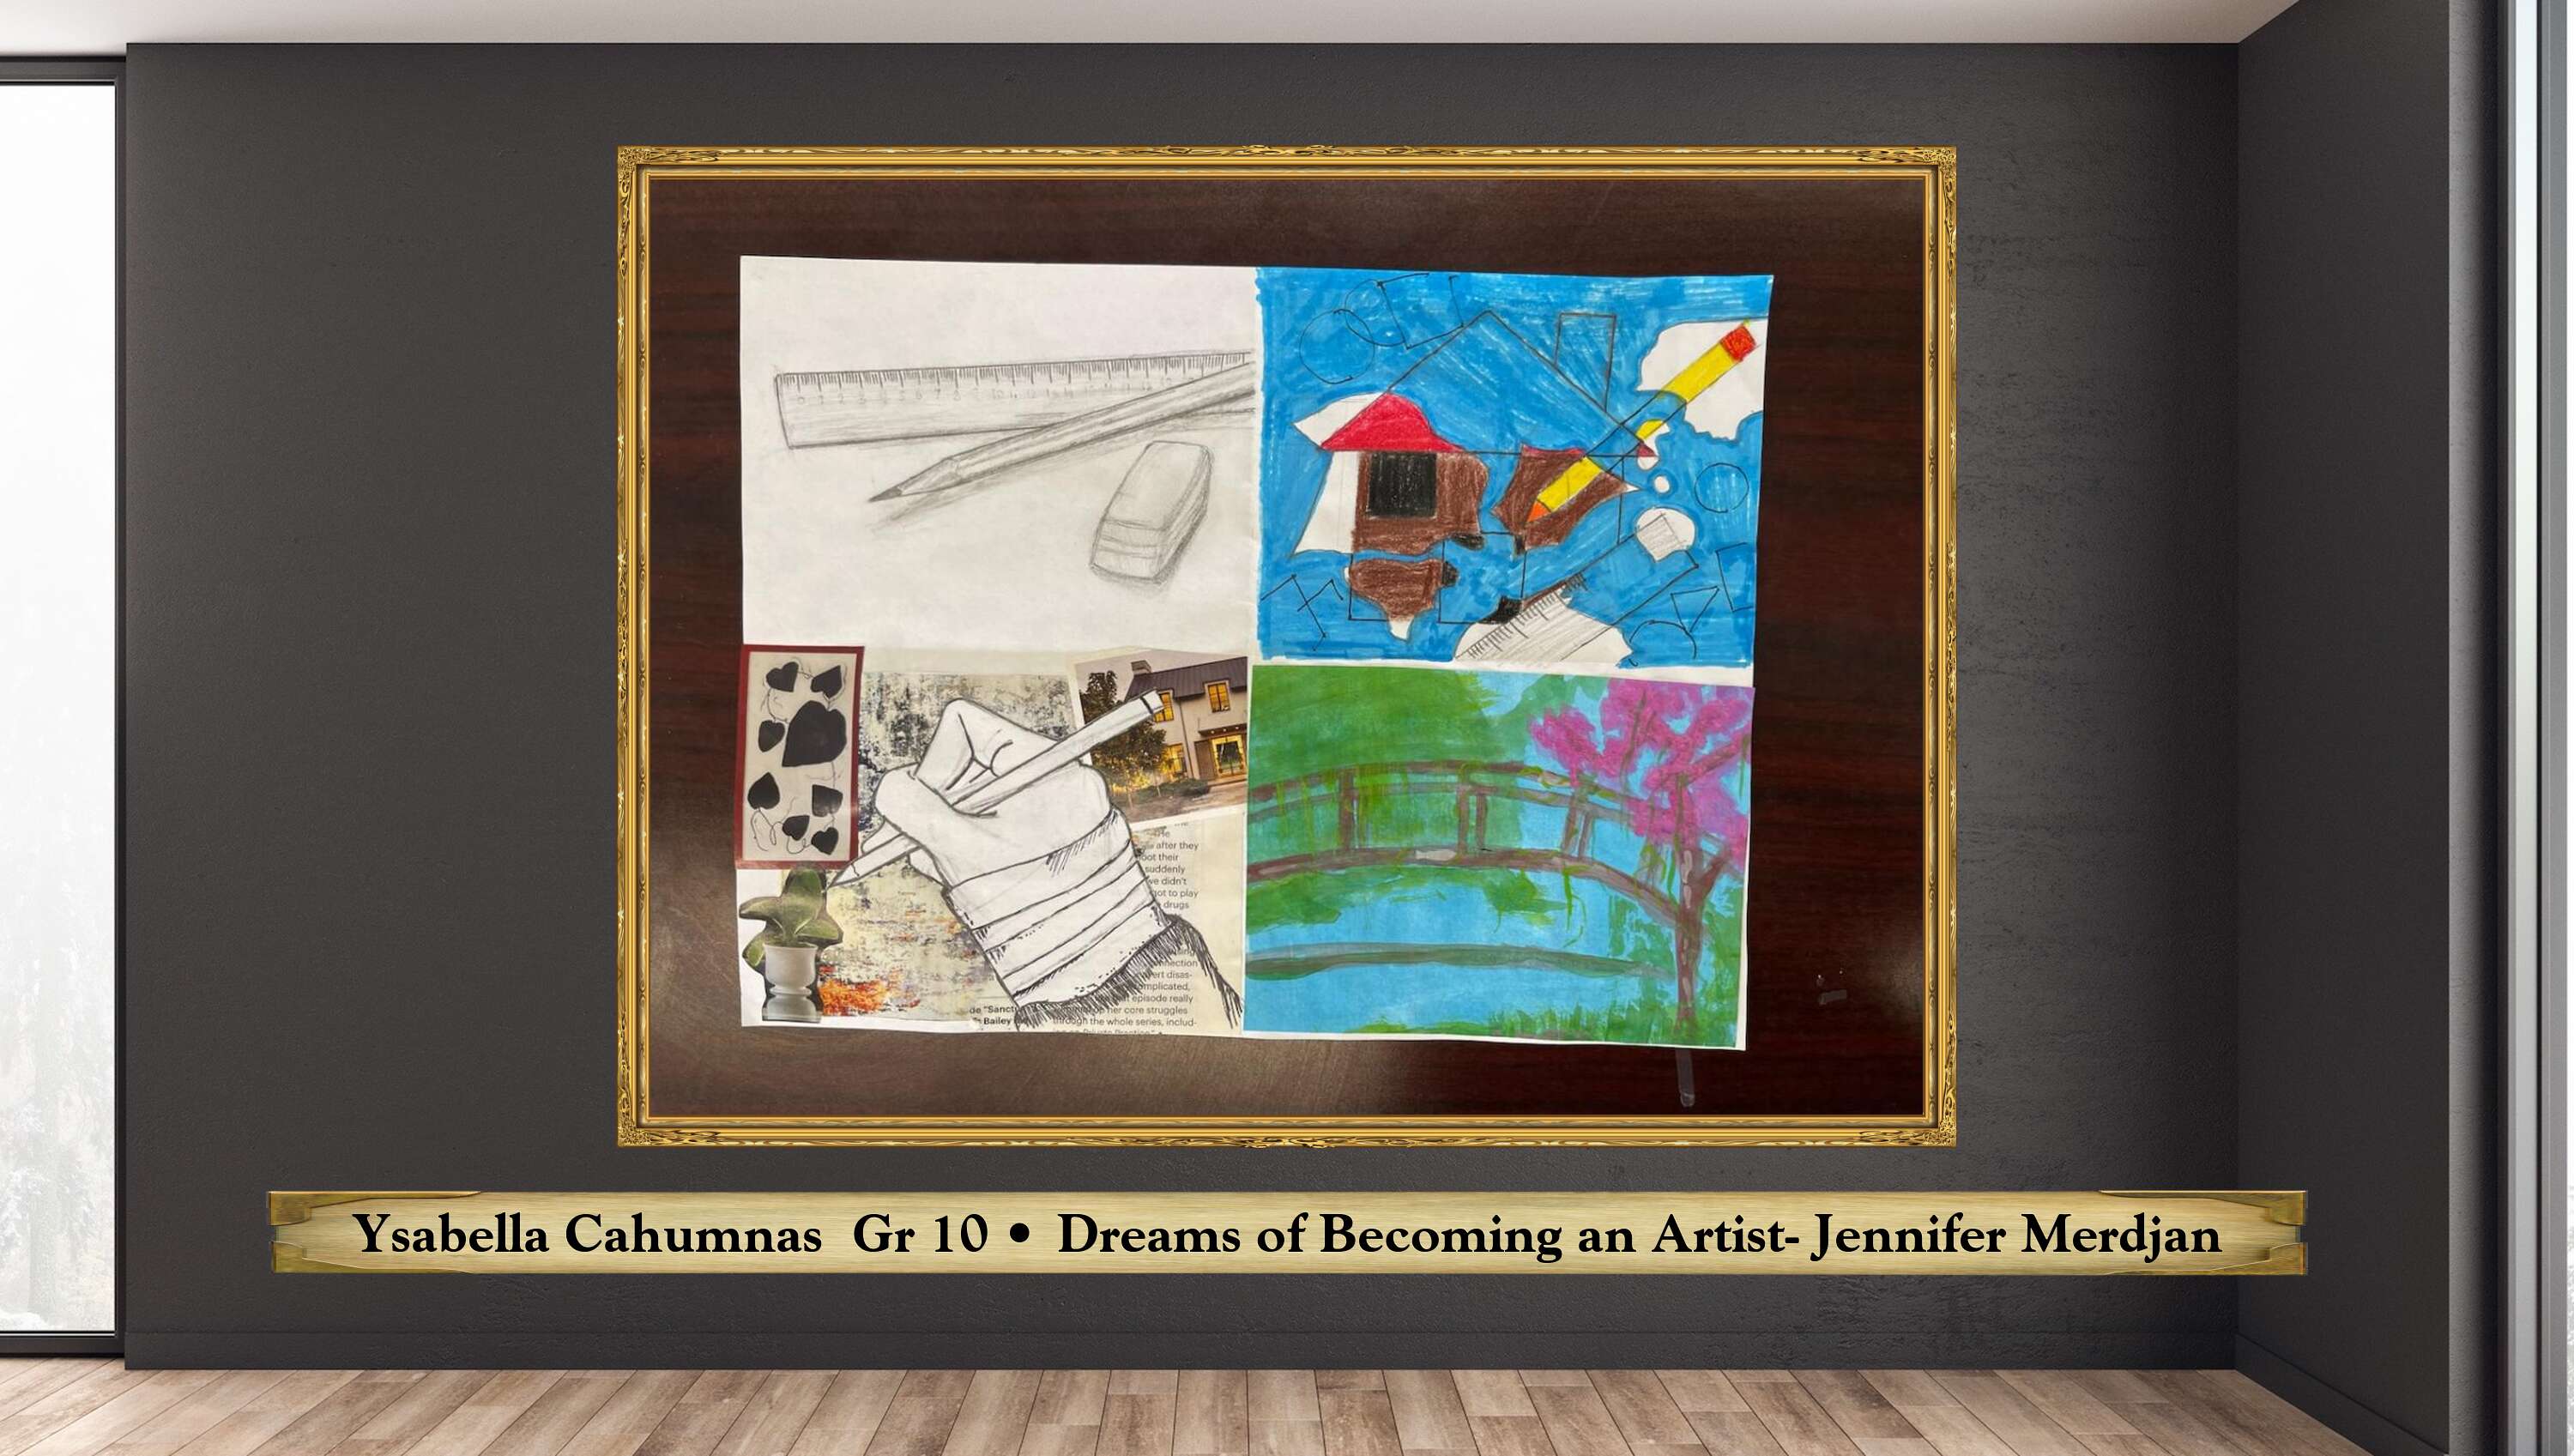 Ysabella Cahumnas  Gr 10 • Dreams of Becoming an Artist- Jennifer Merdjan